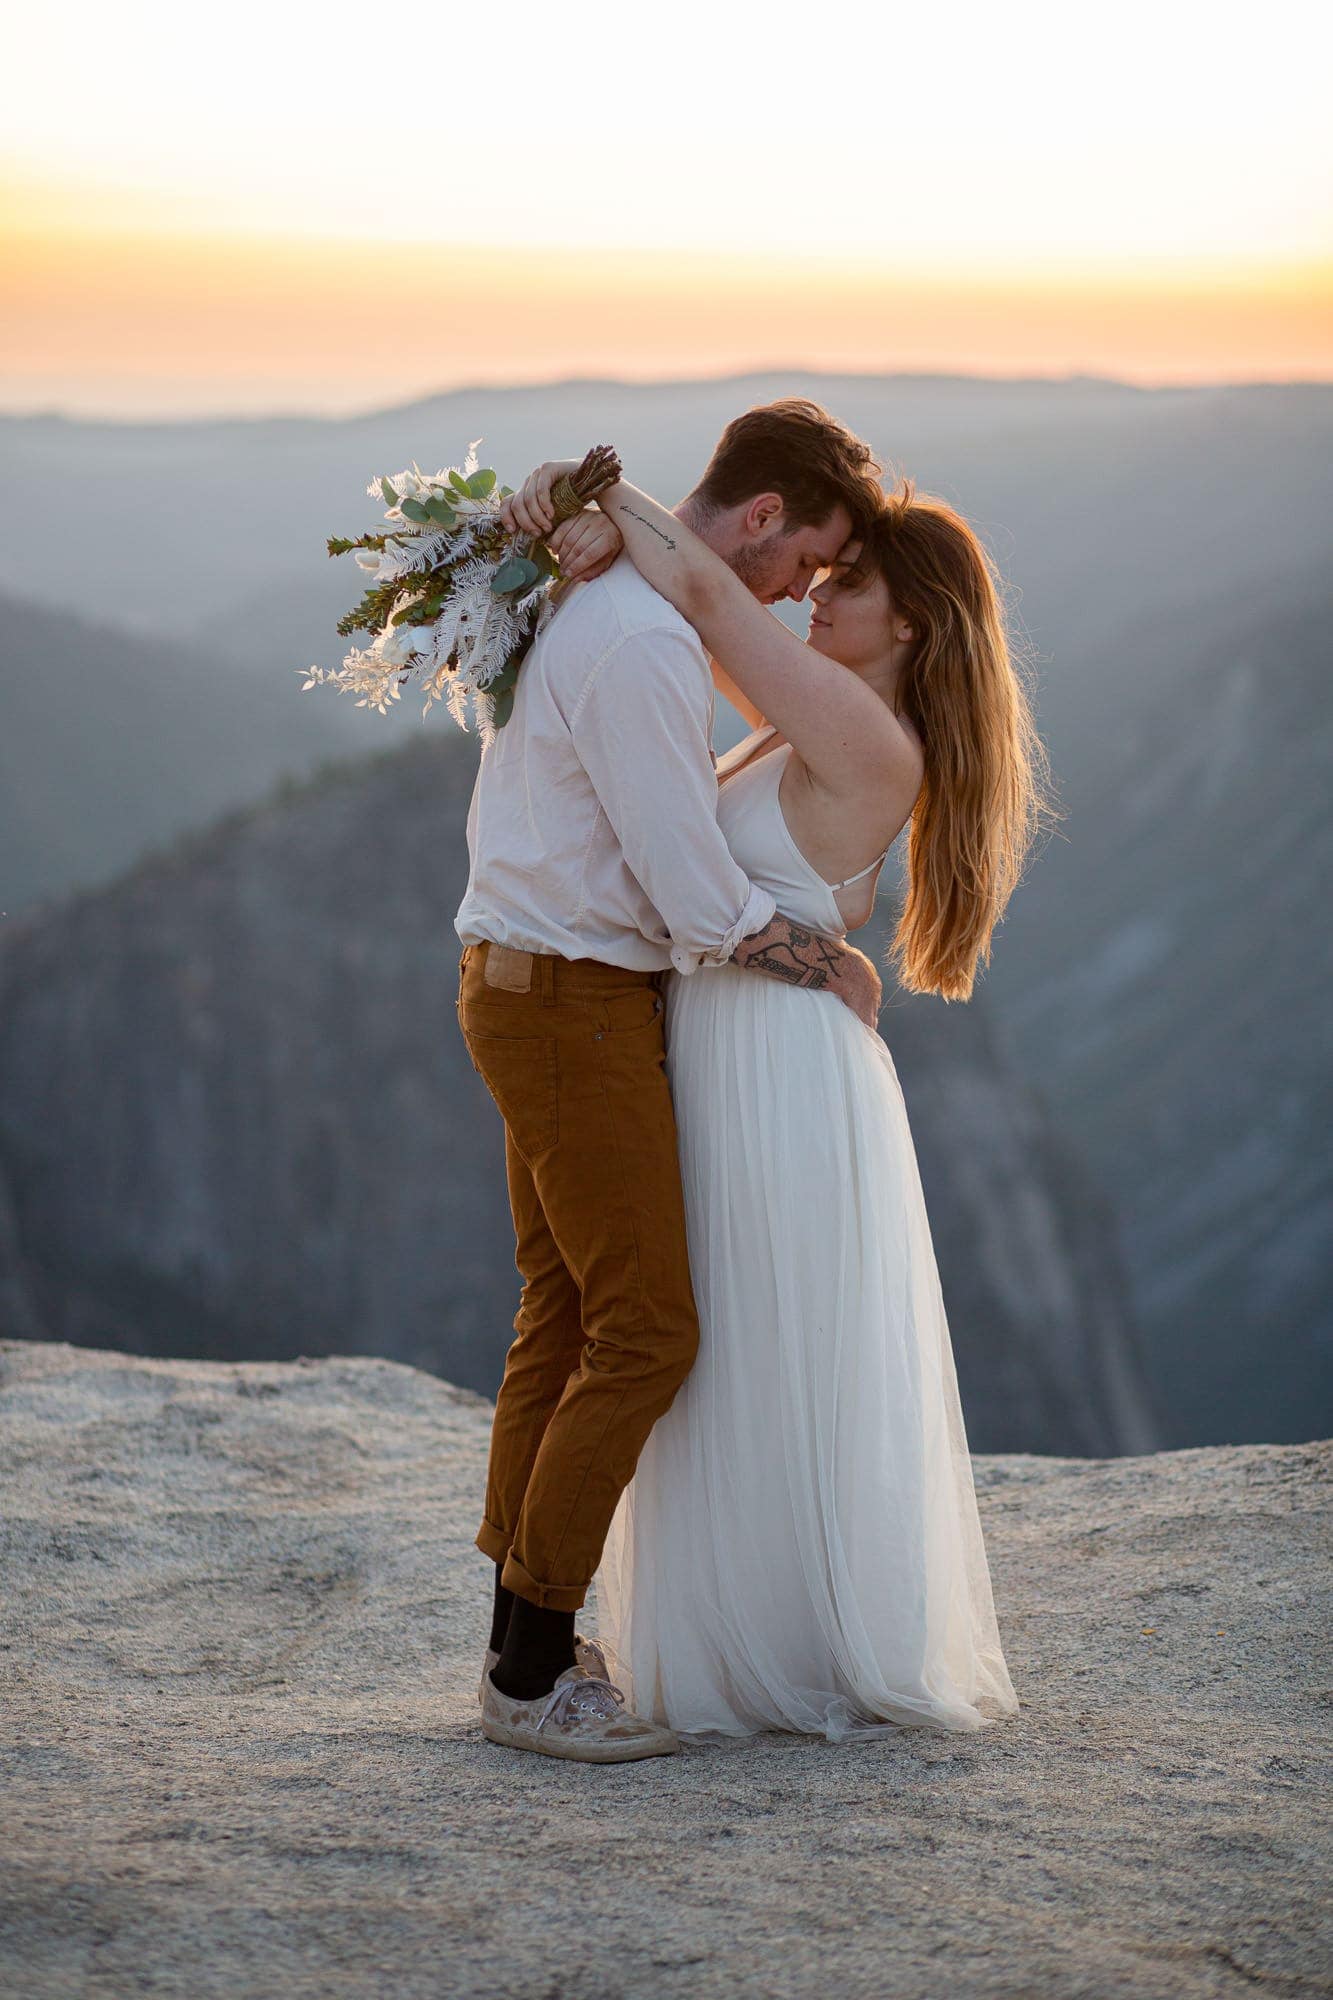 Adventure elopement in Yosemite at sunset